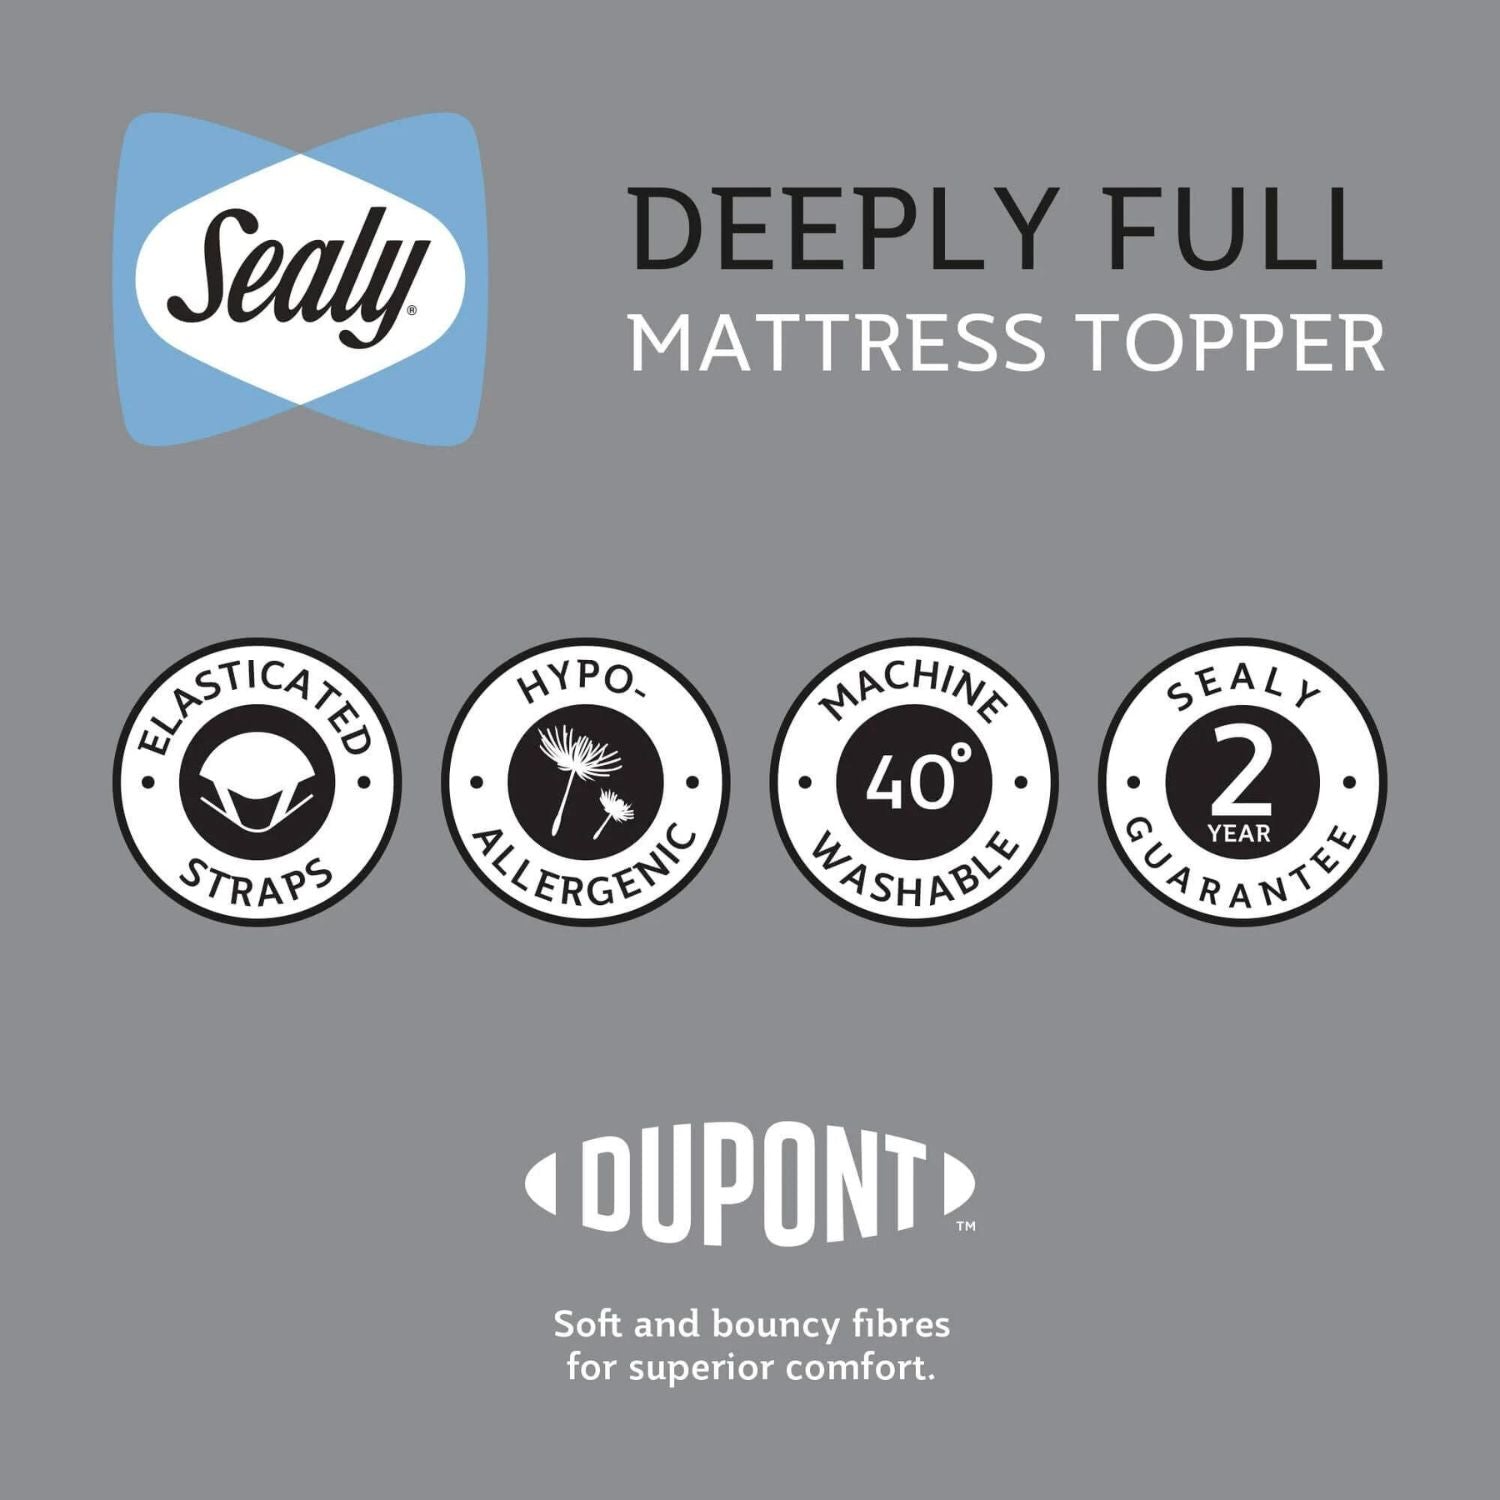 Sealy Deeply Full Mattress Topper